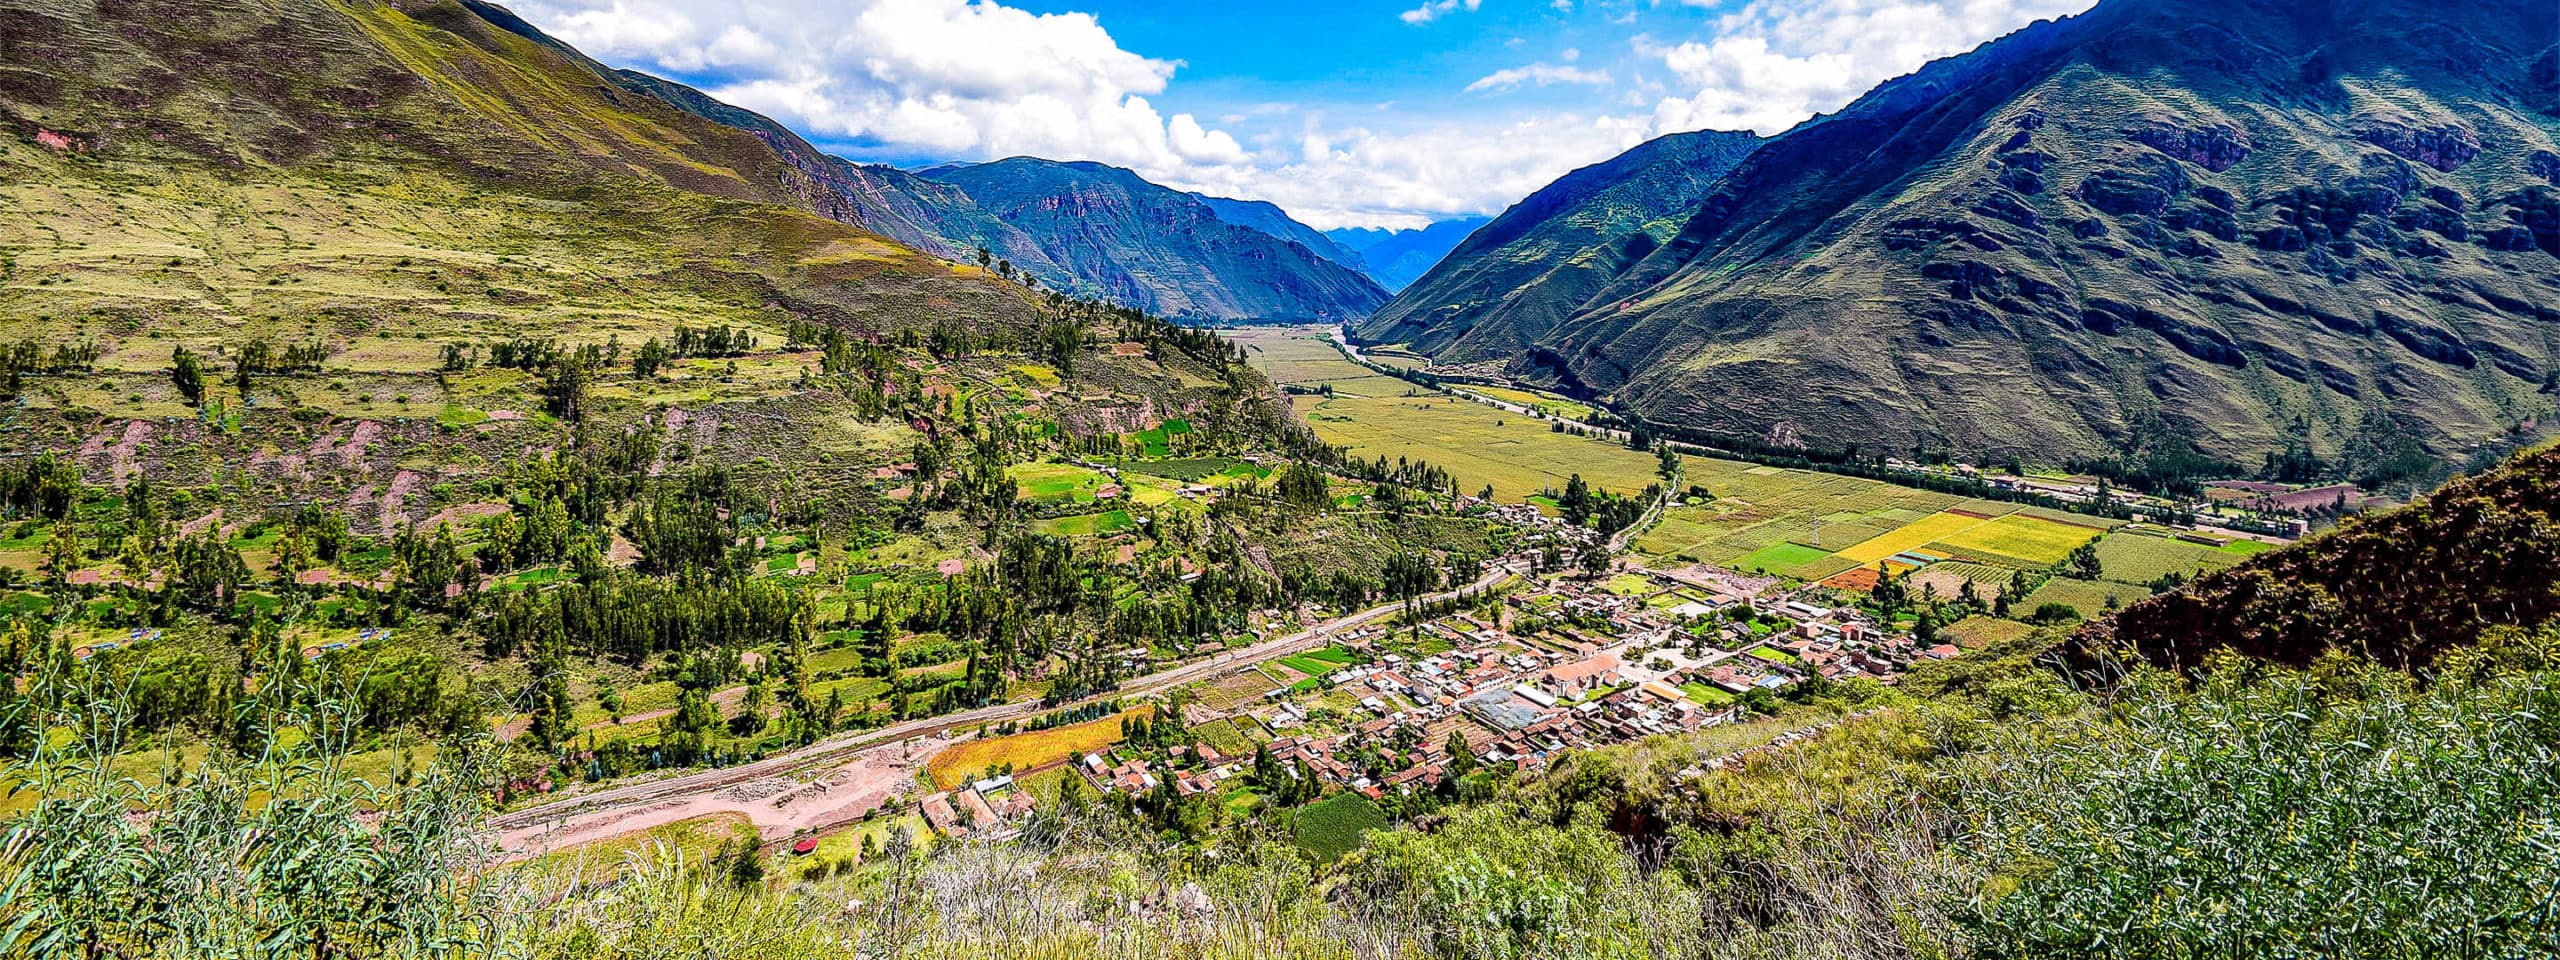 8D 7N Tour Highlights of Cusco